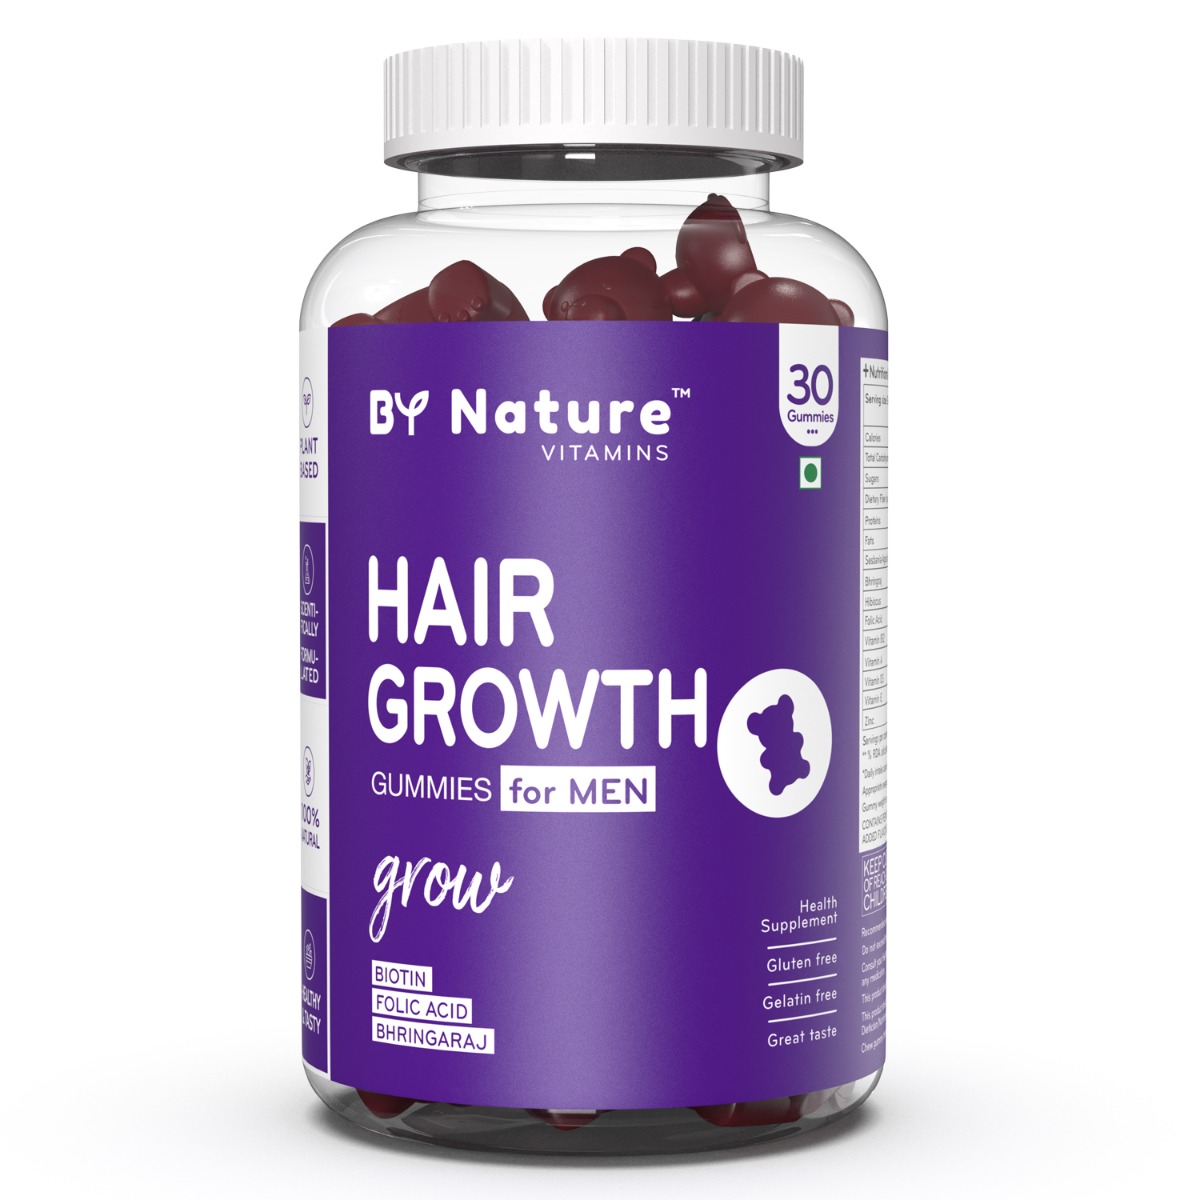 By Nature Hair Growth Gummies for Men with Biotin, Folic acid & Bhringaraj, 30 Gummies